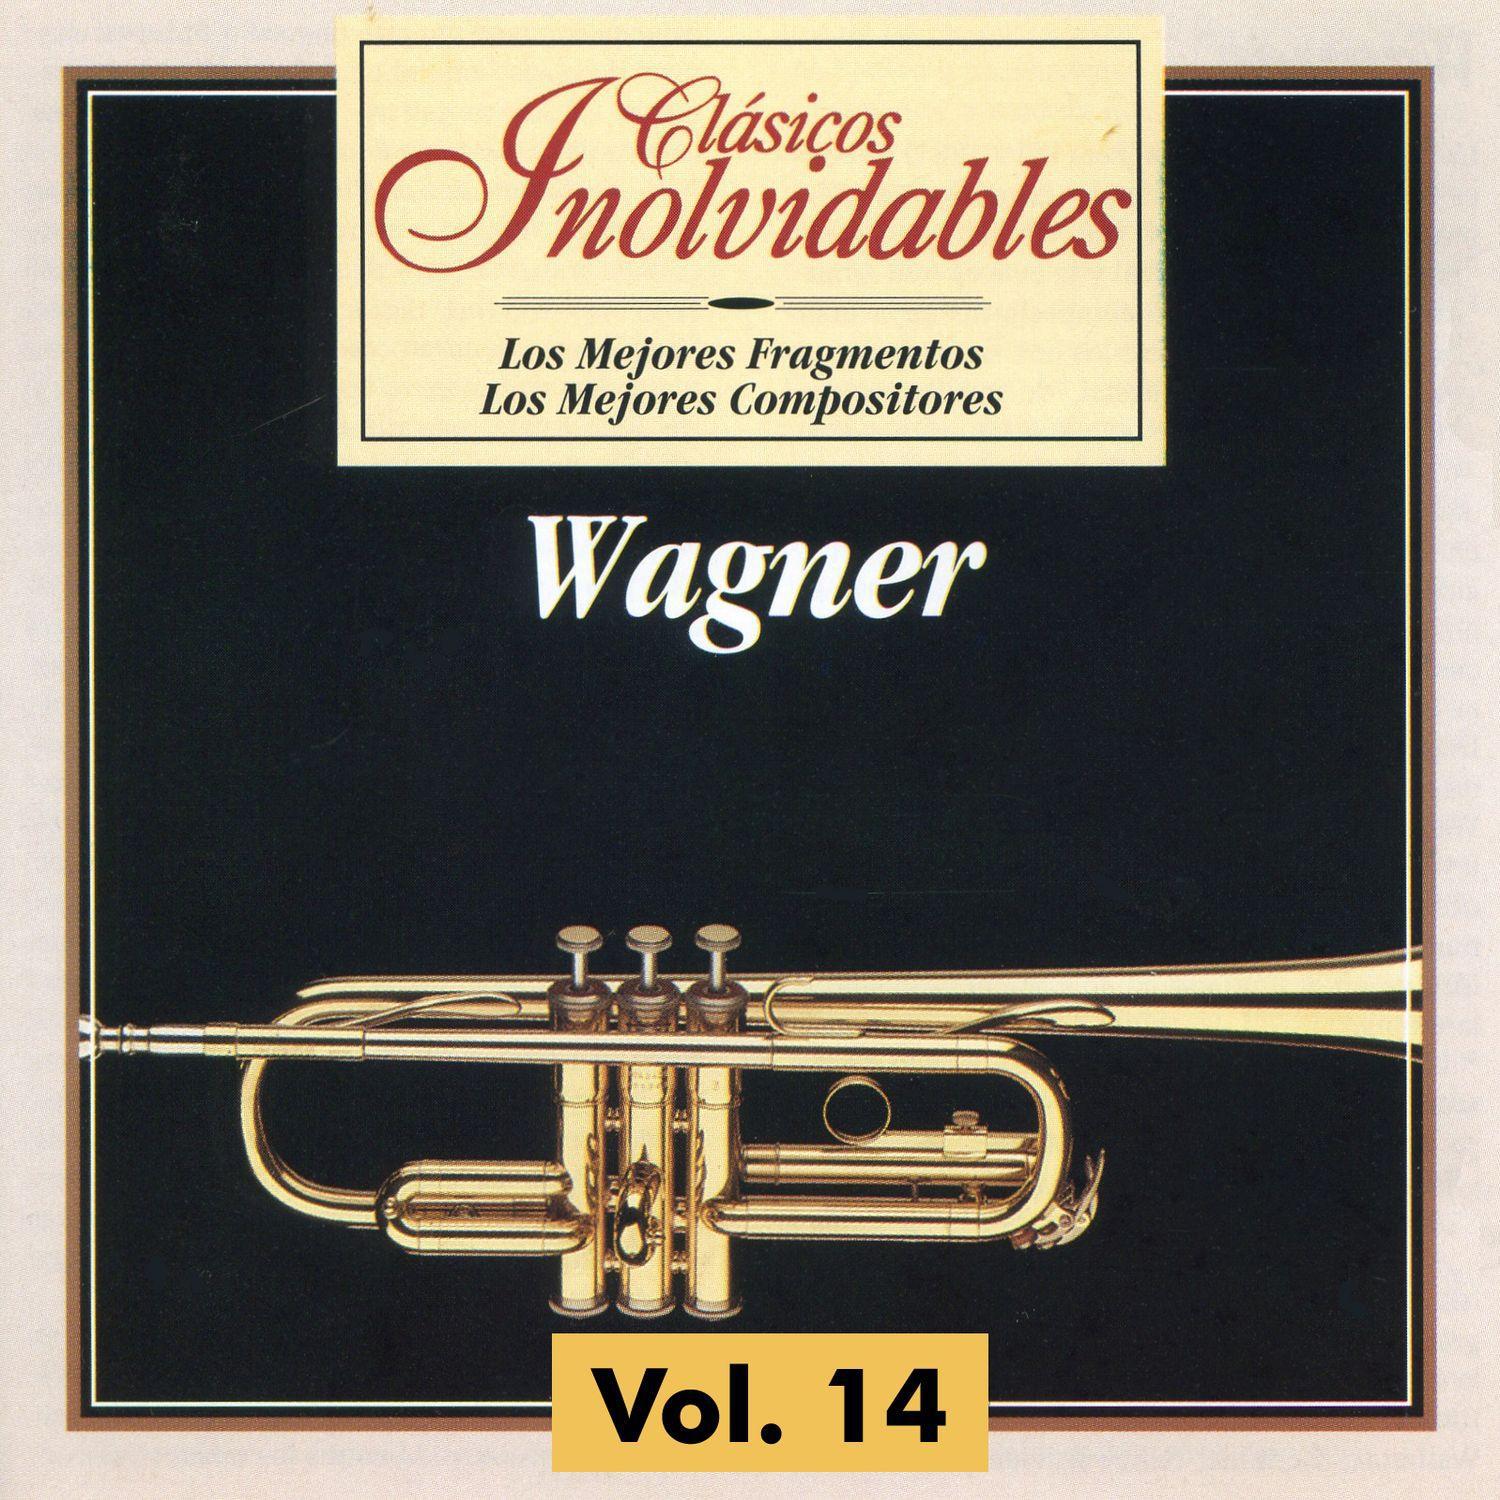 Clásicos Inolvidables Vol. 14, Wagner专辑